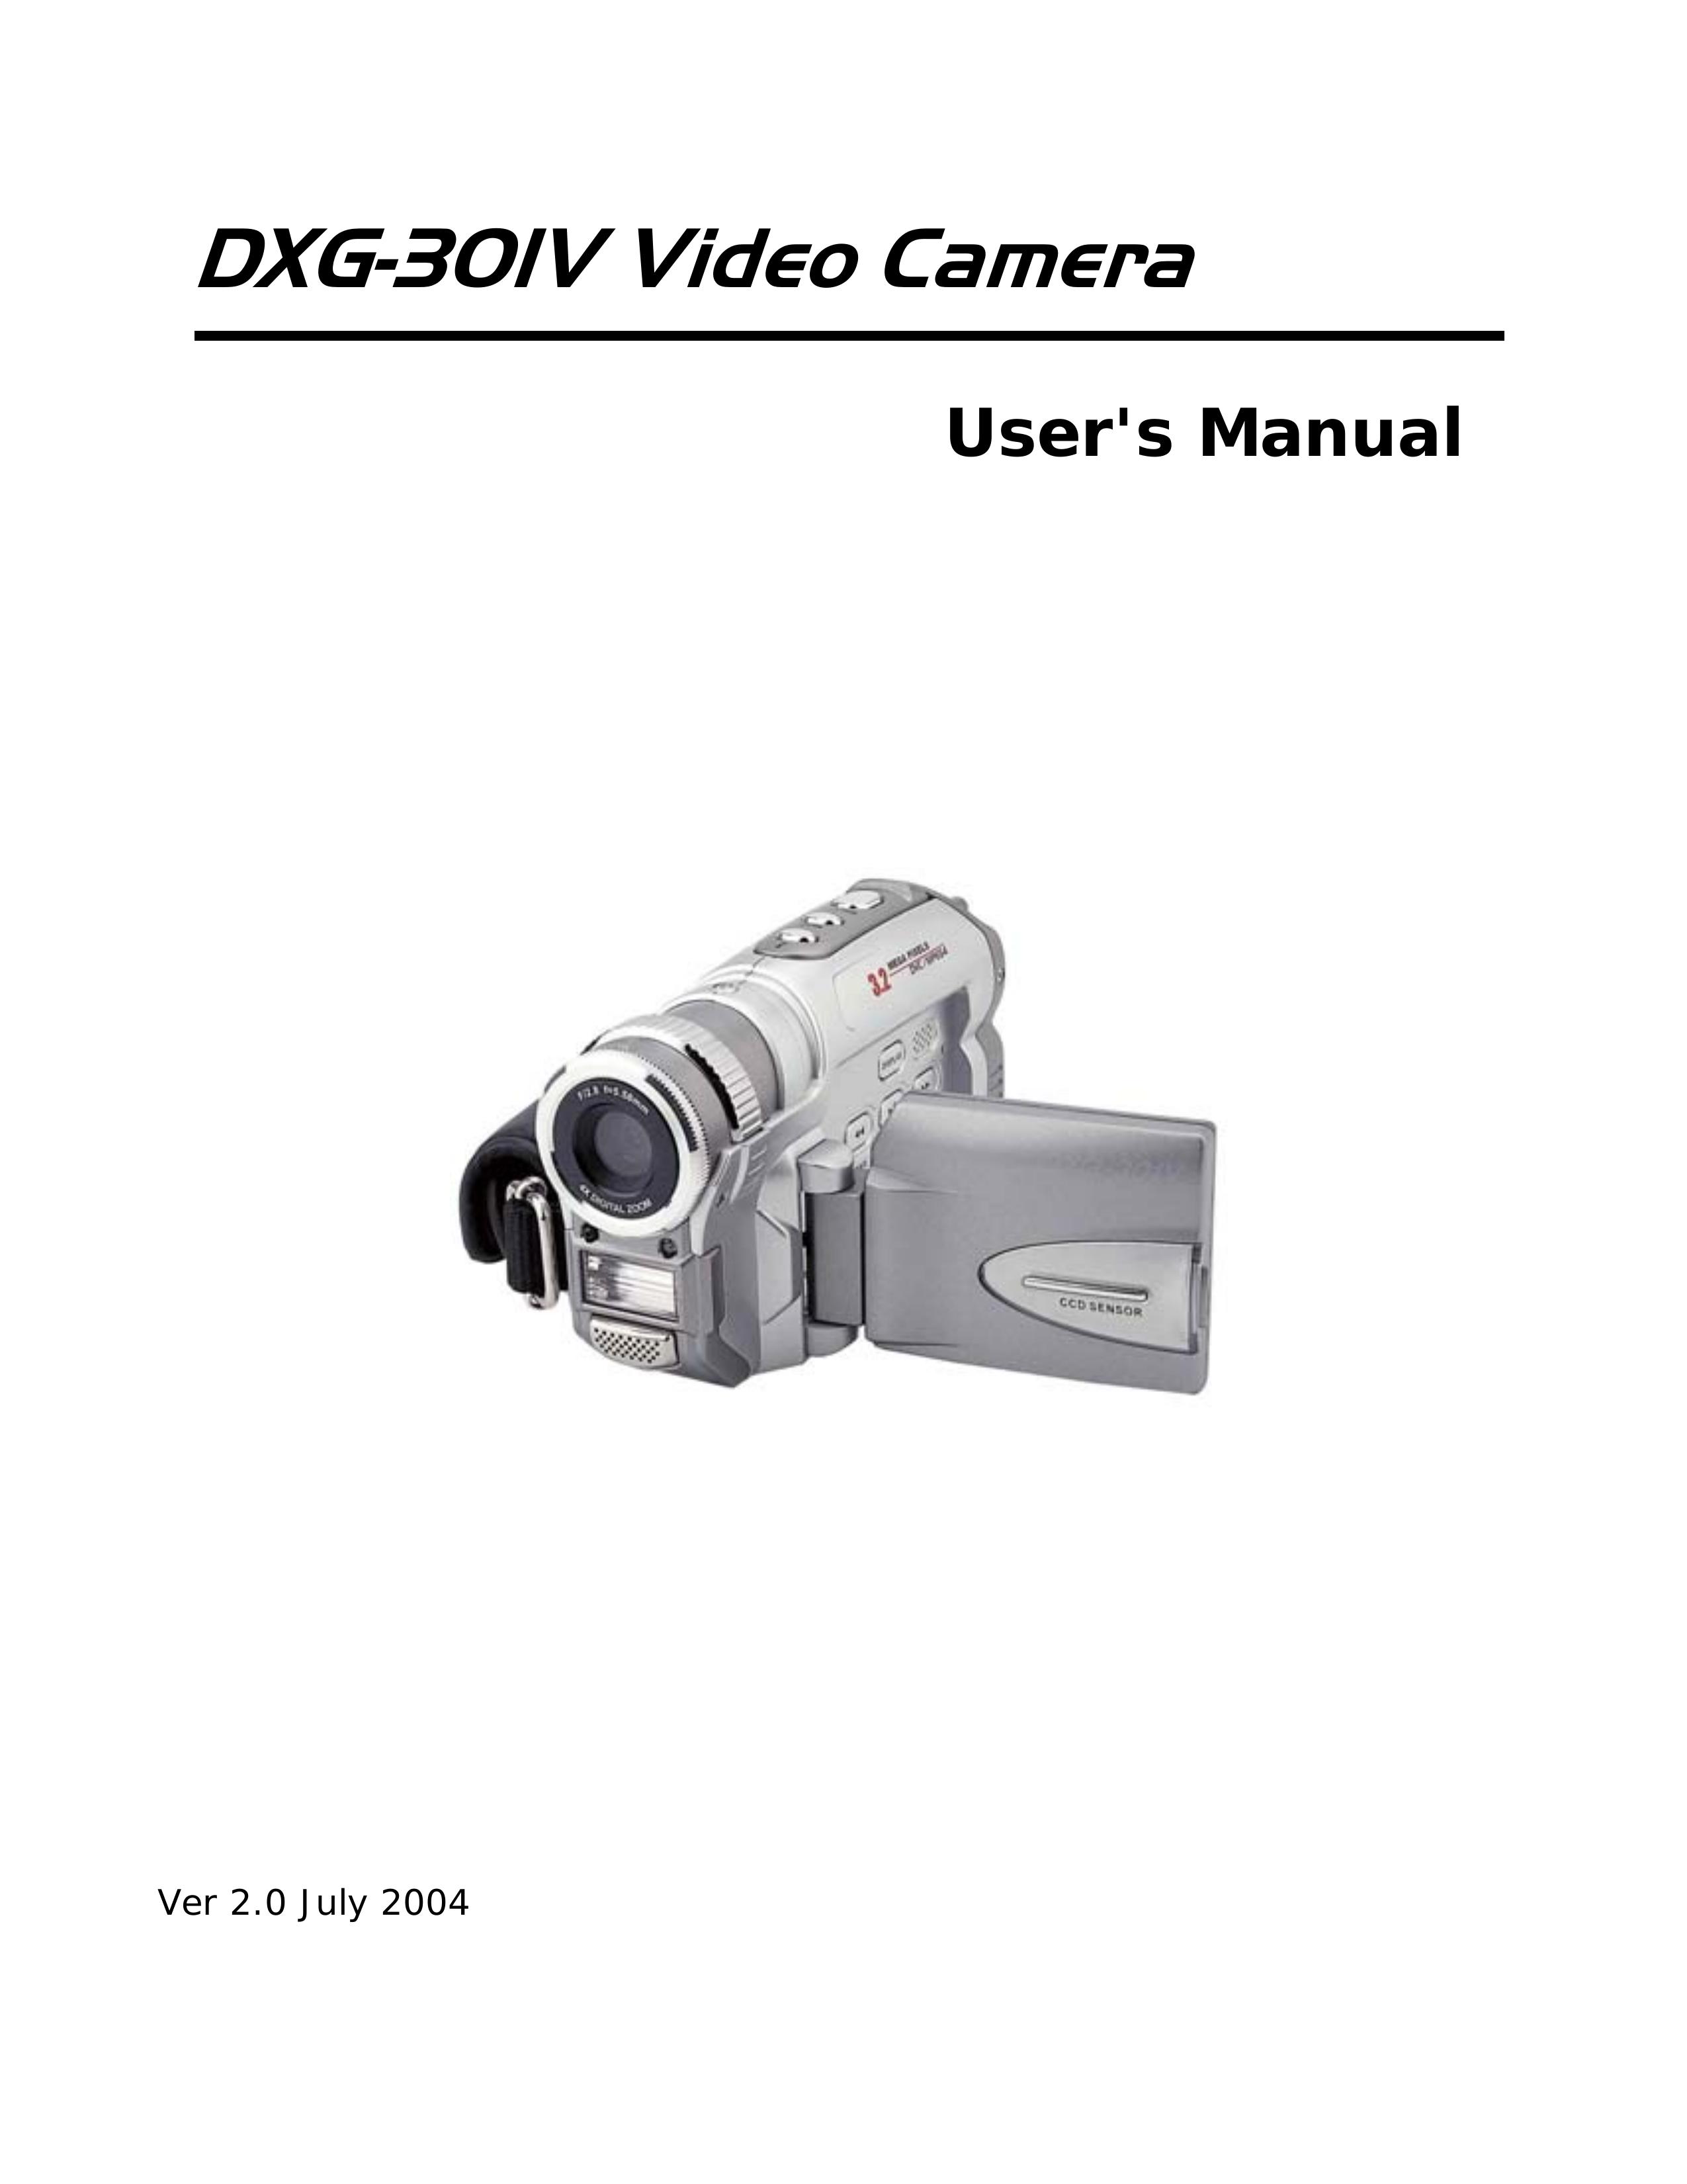 DXG Technology DXG-301V Camcorder User Manual